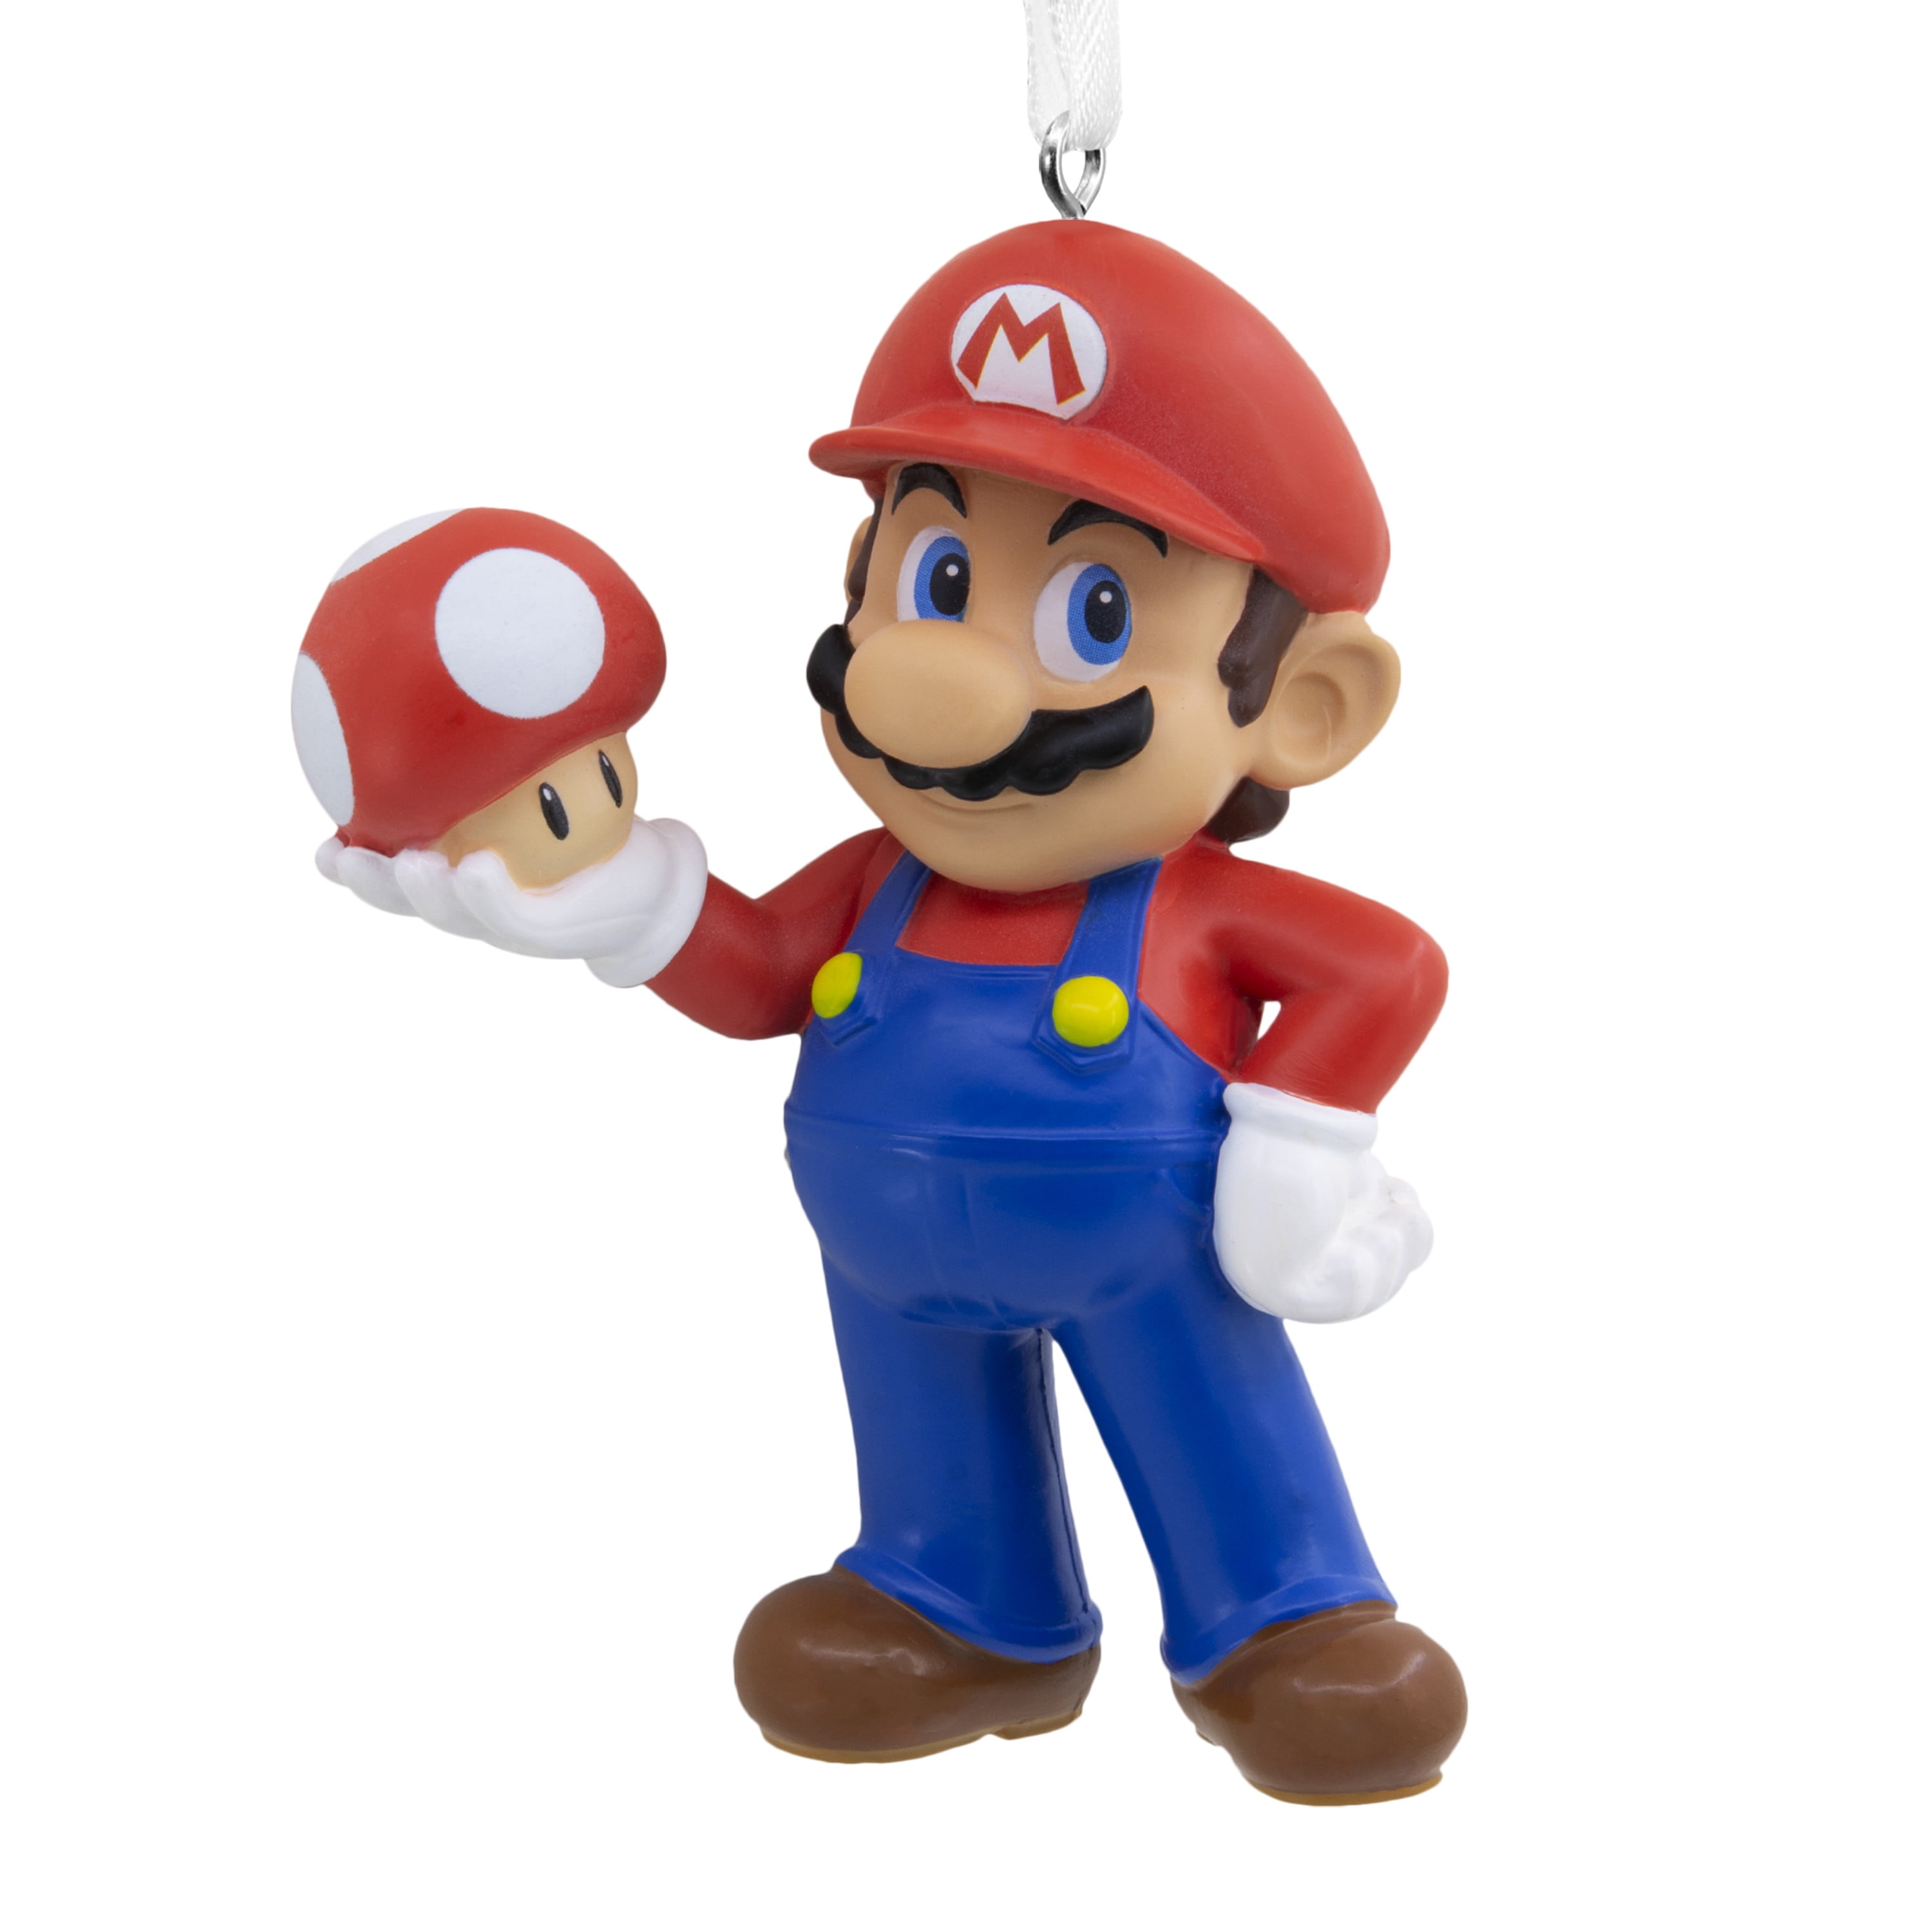 Hallmark Ornament (Nintendo Super Mario With Super Mushroom)